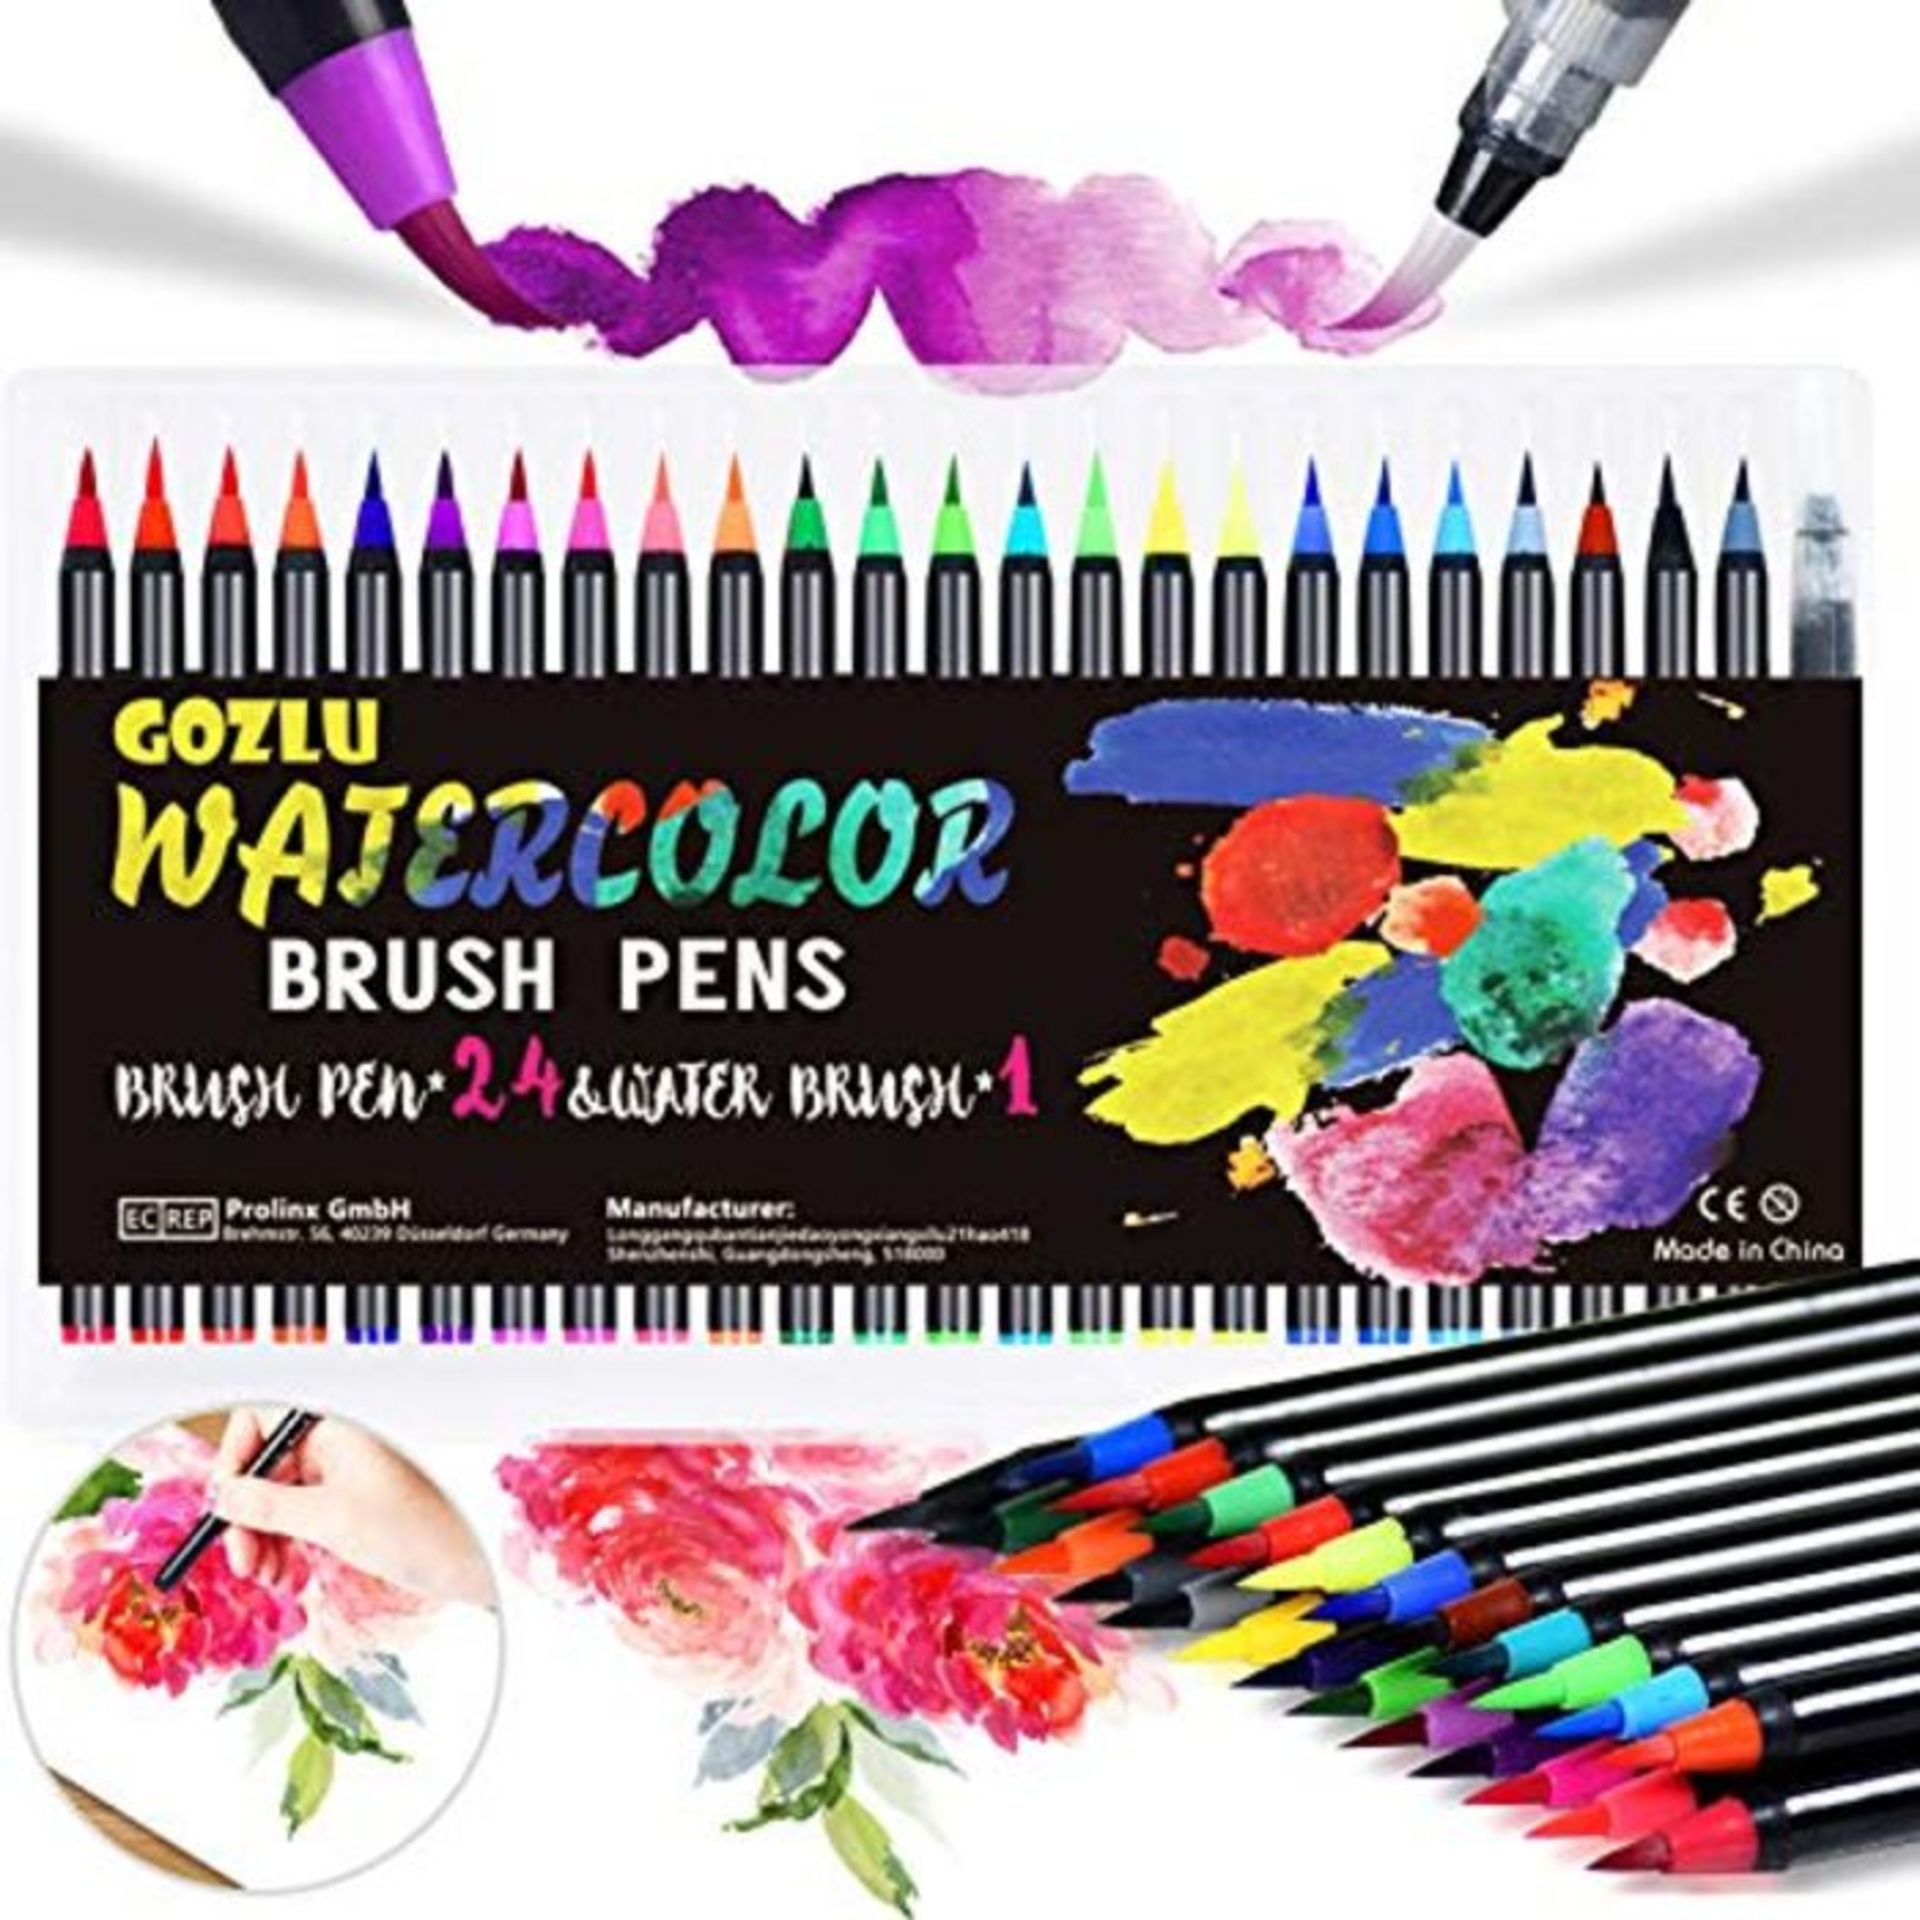 Gozlu Watercolour Brush Pens Set, 24 Colouring Pens with Flexible Nylon Tips, 1 Water